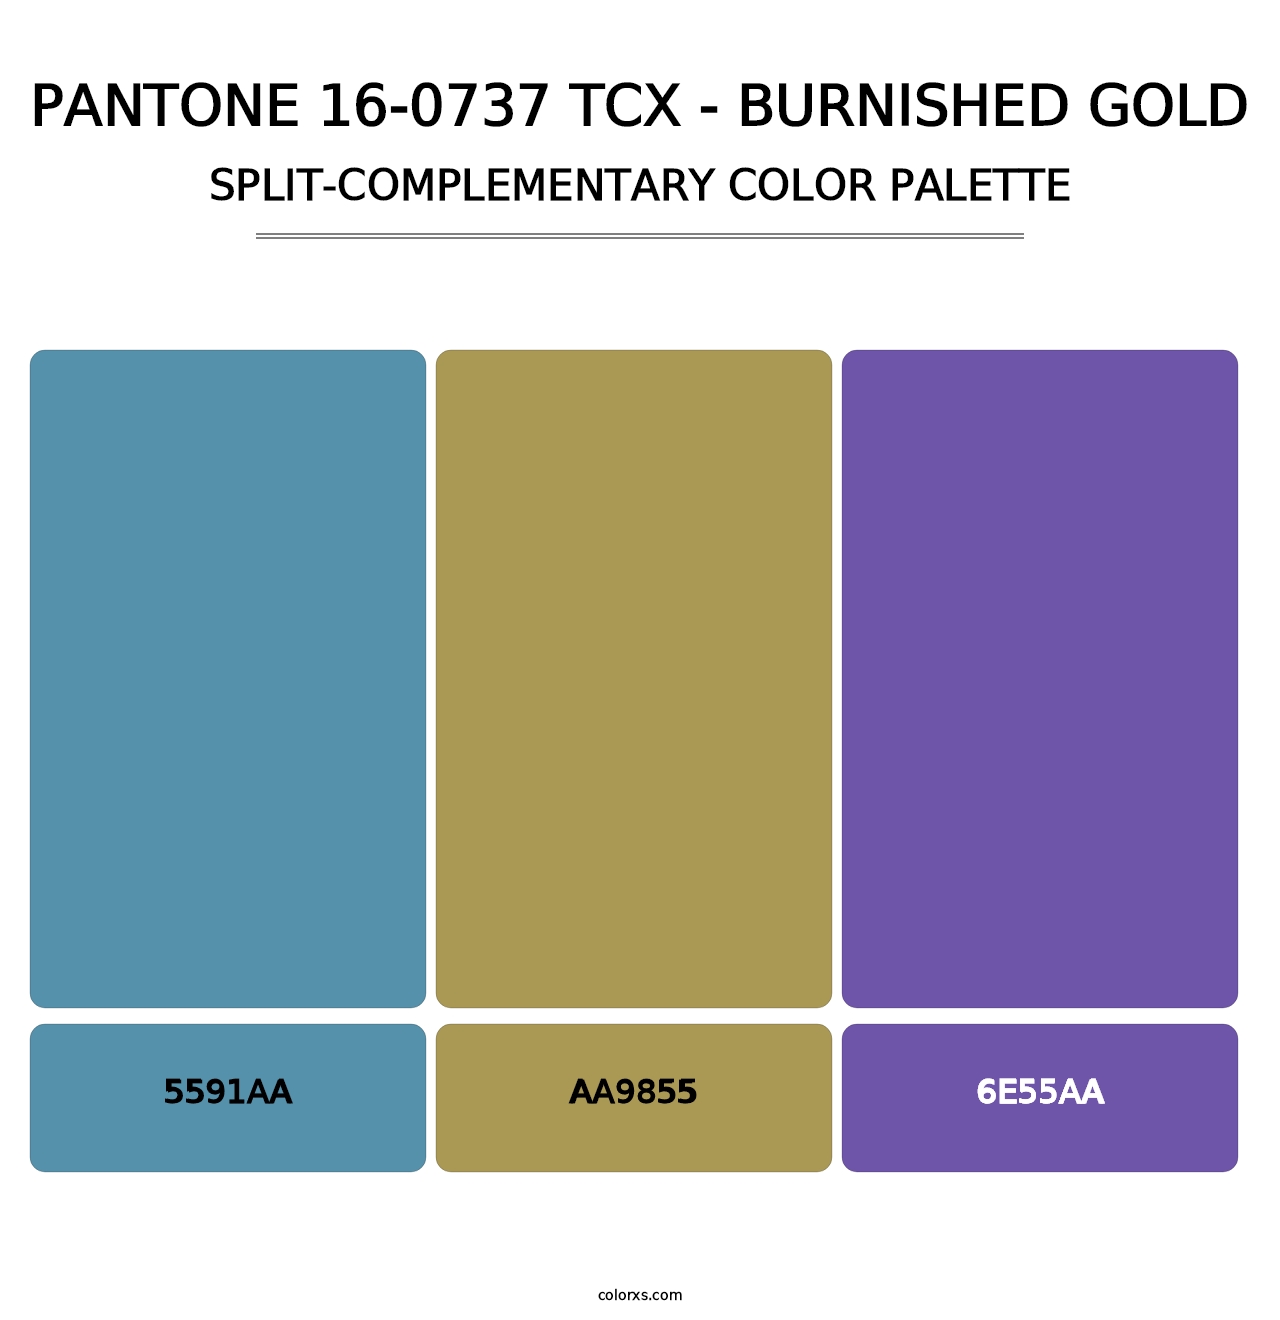 PANTONE 16-0737 TCX - Burnished Gold - Split-Complementary Color Palette